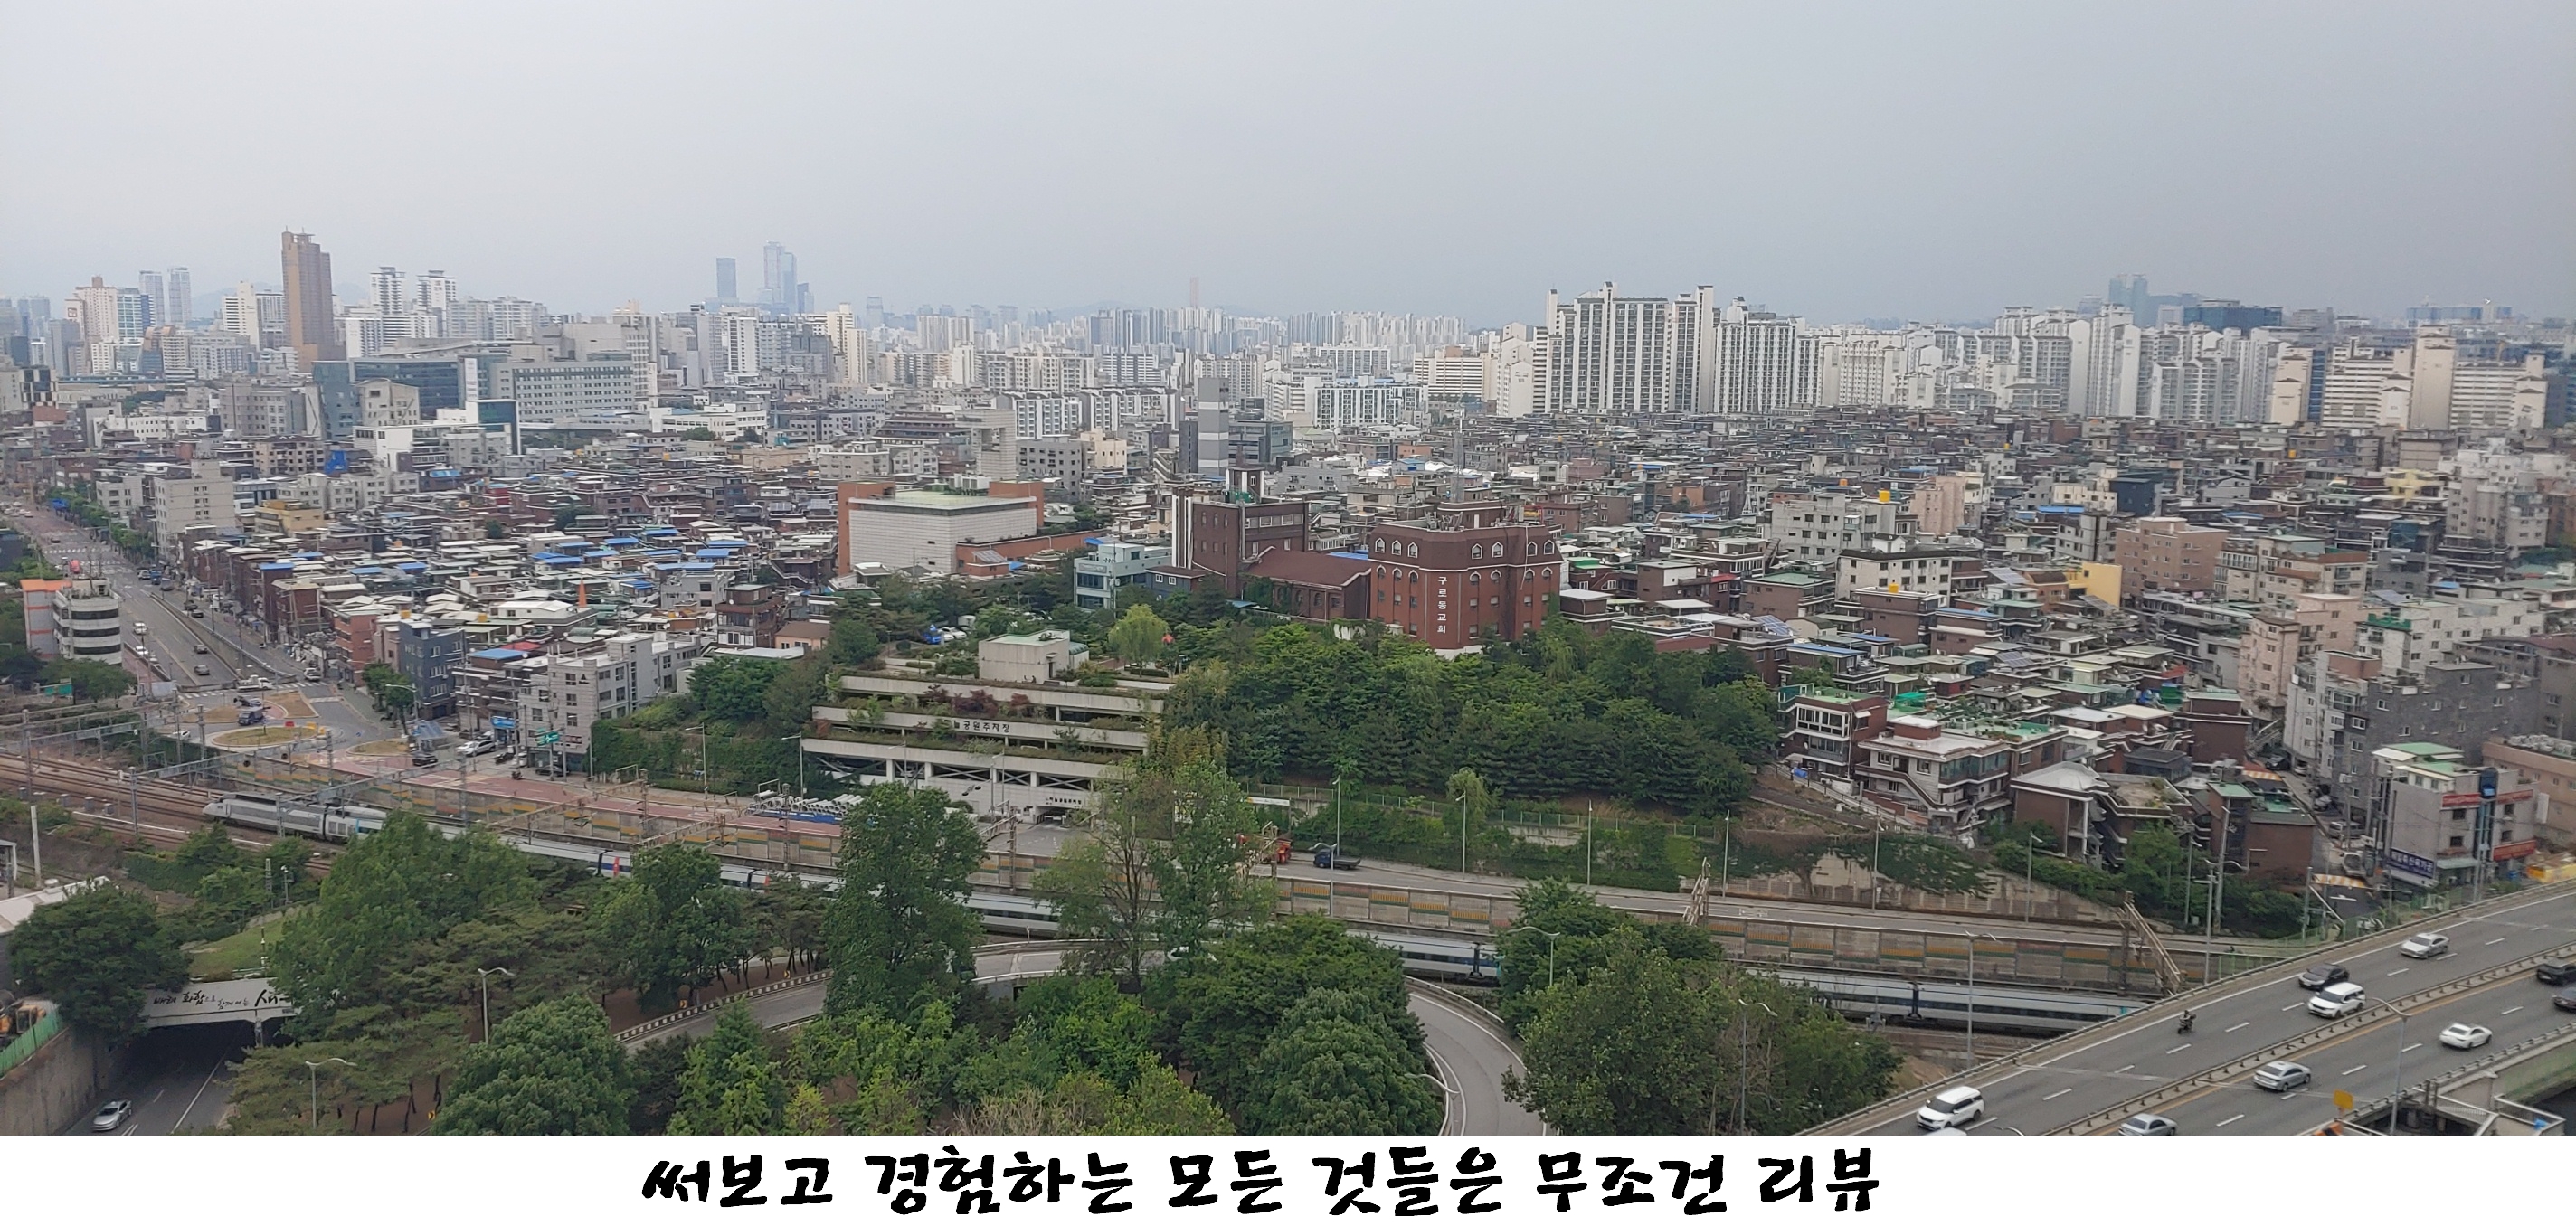 220530&#44; Seoul&#44; 사진&#44; 서울&#44; 풍경&#44; 하늘